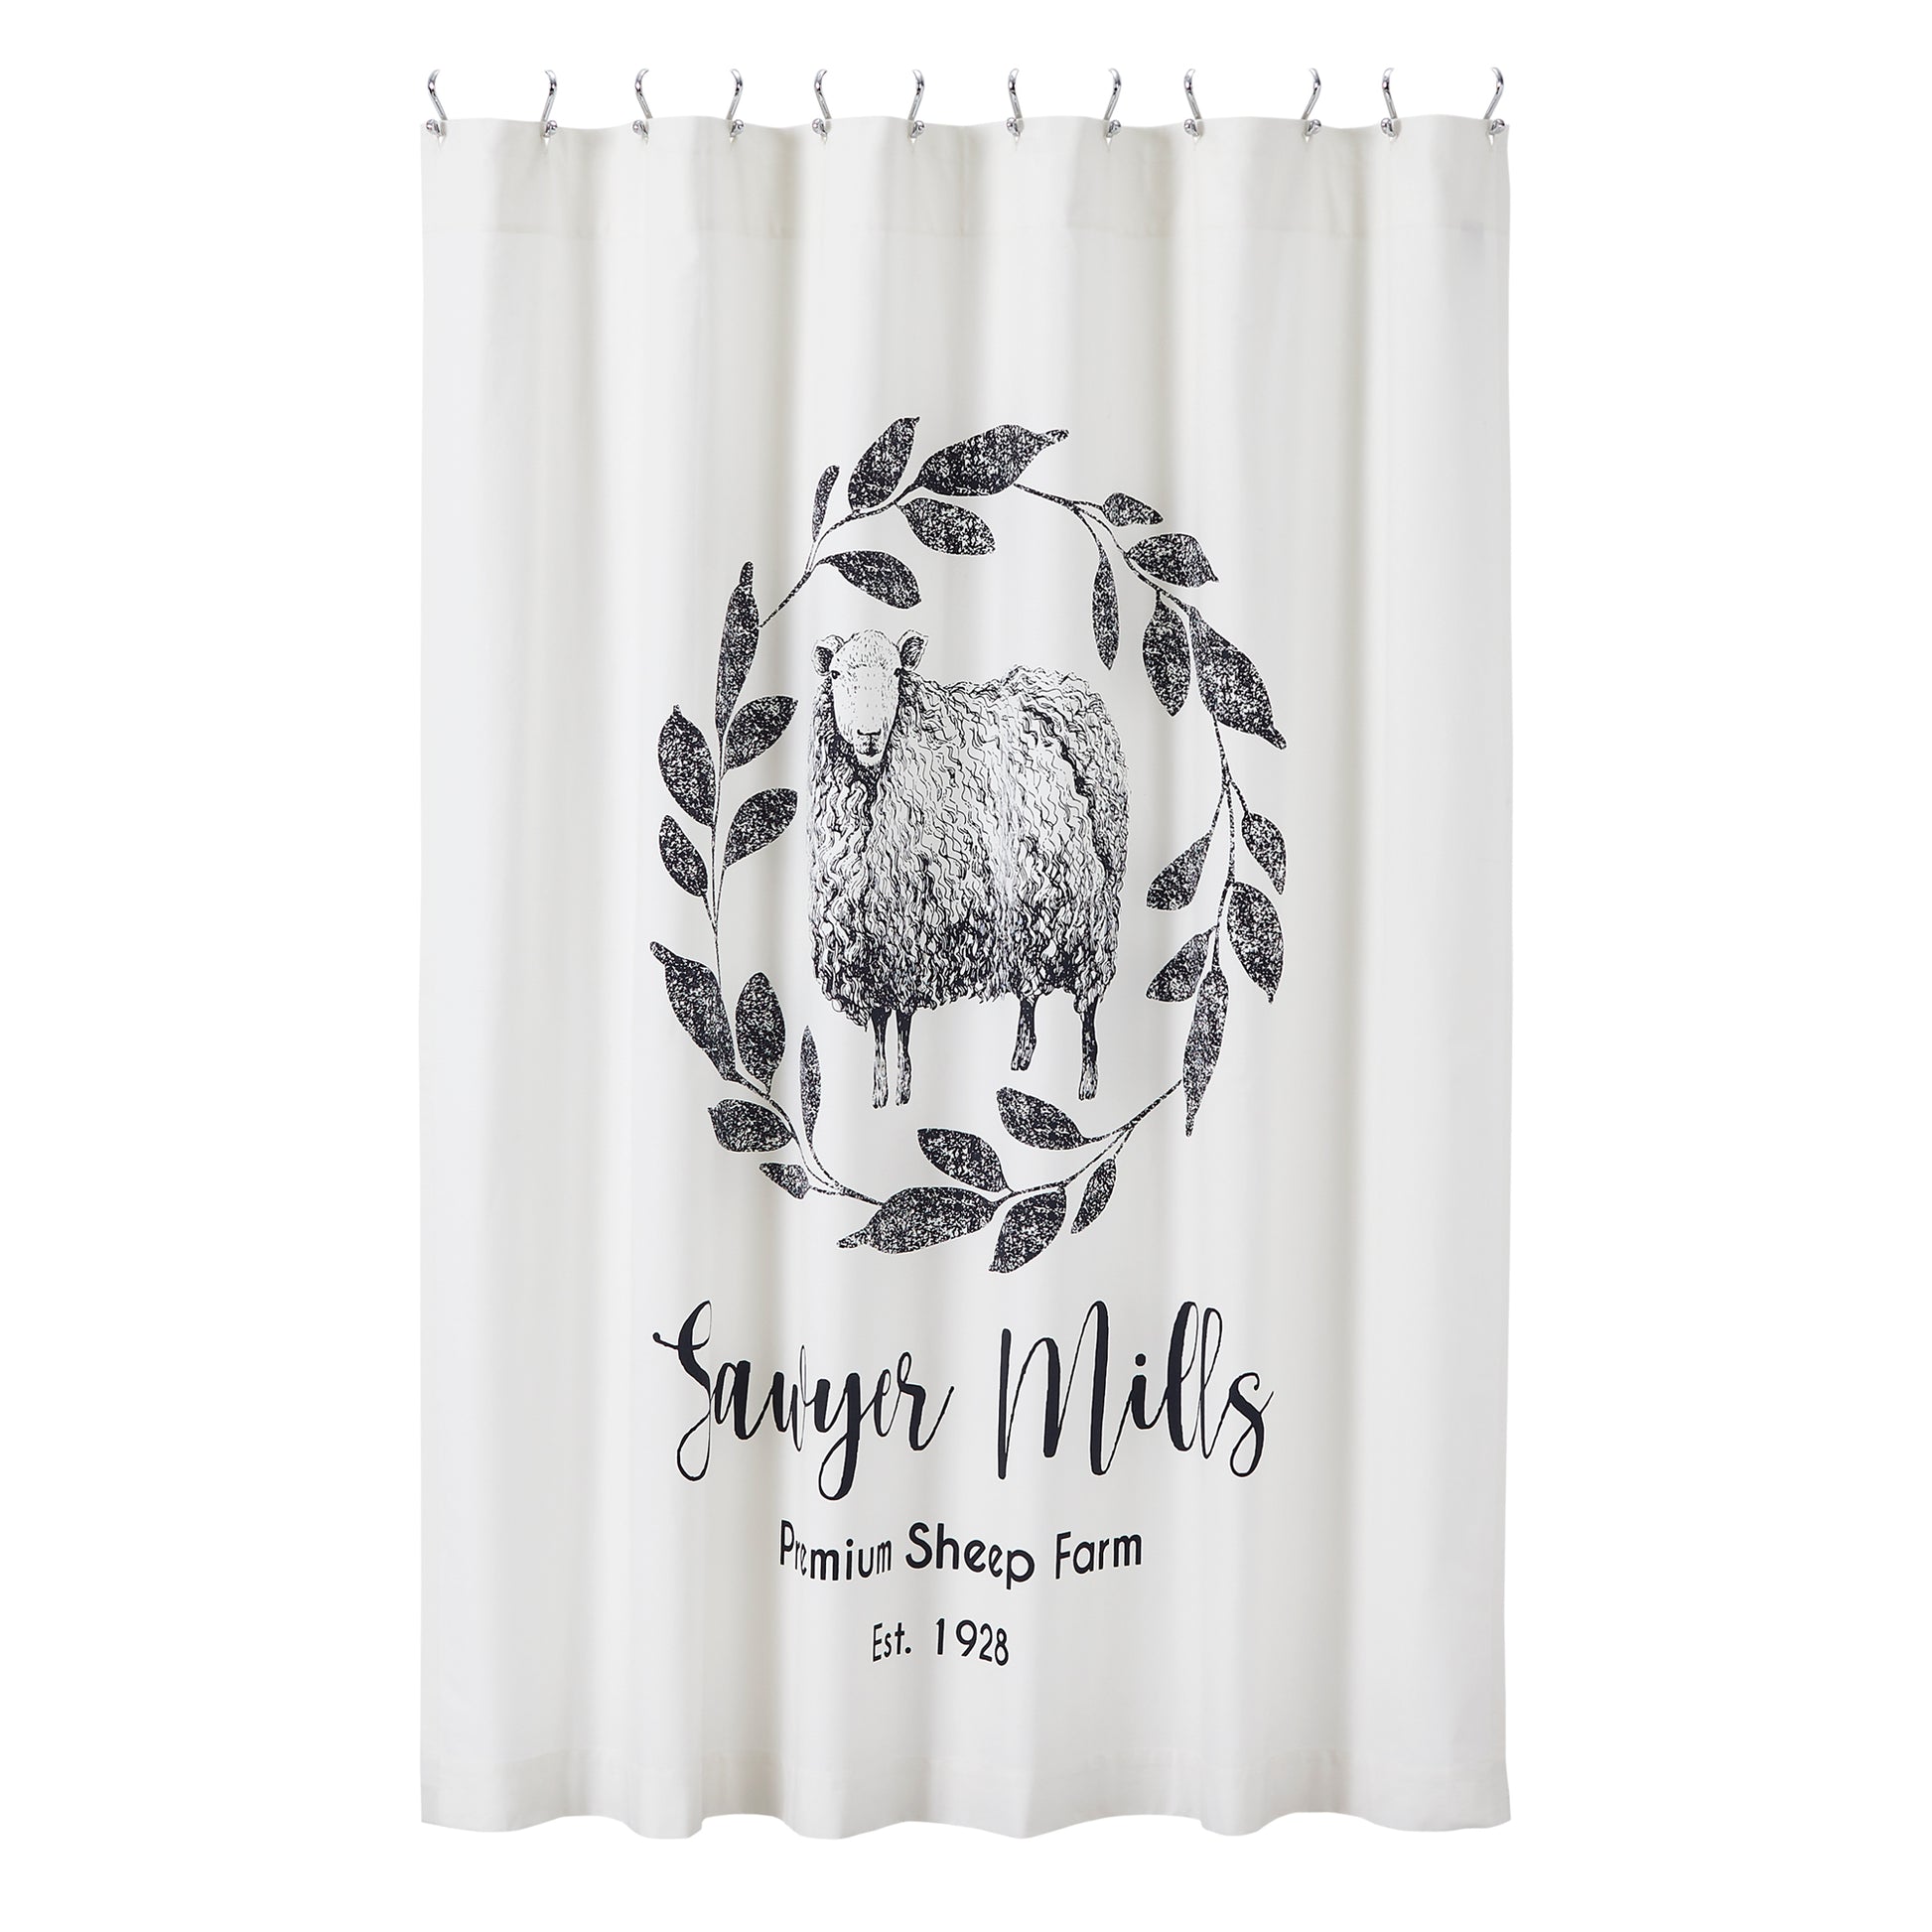 Sawyer Mill Black Sheep Shower Curtain